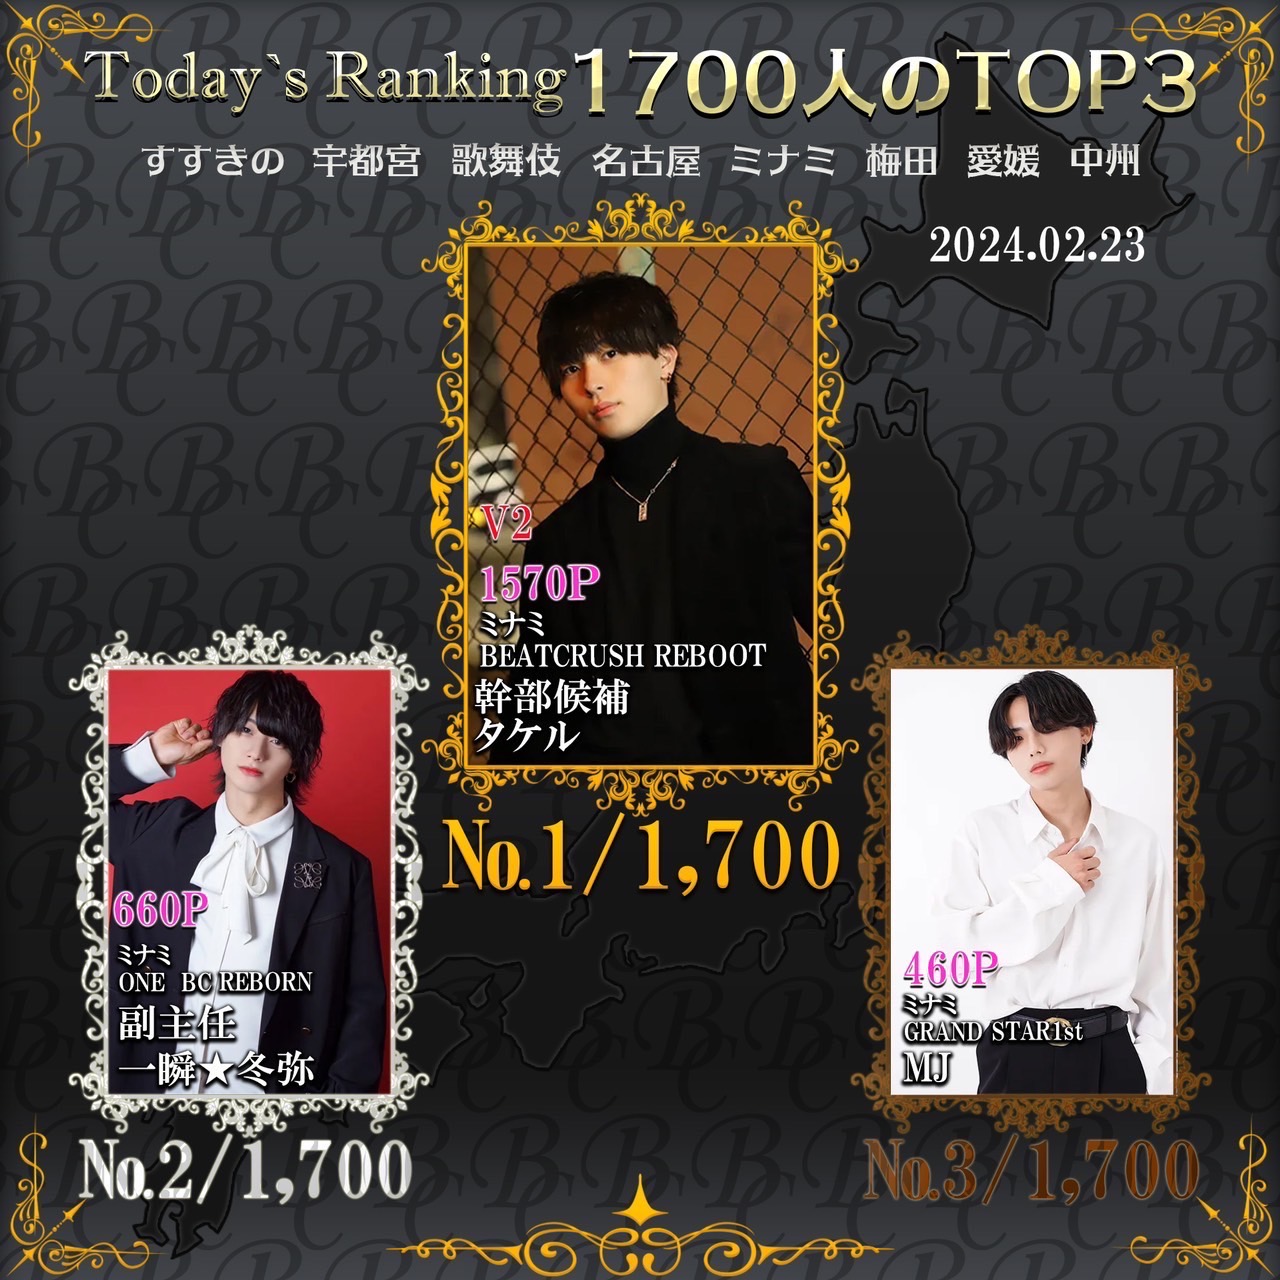 2/23 Today’s Ranking